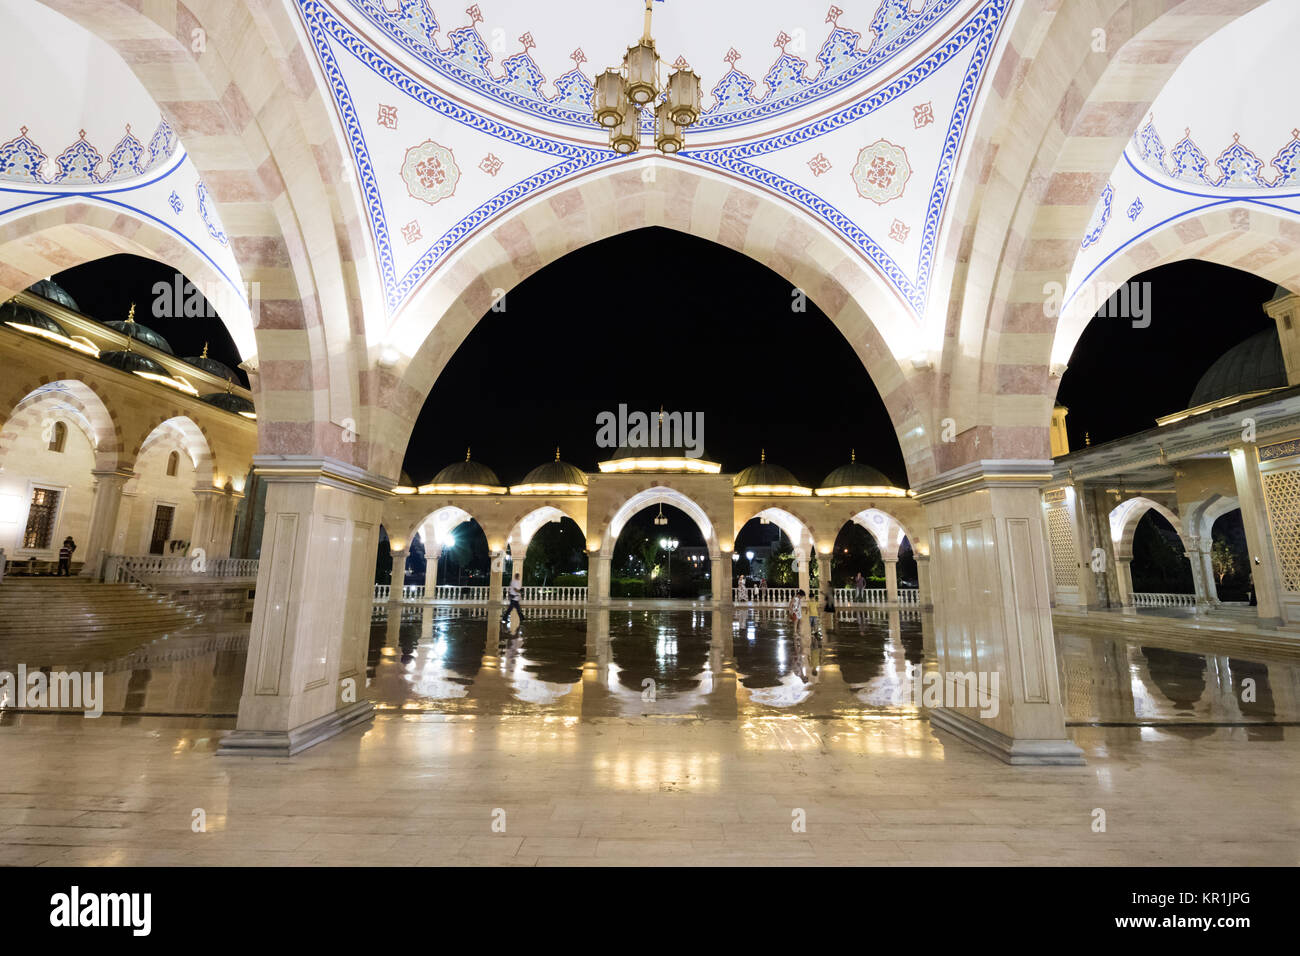 The Heart of Chechnya Mosque at night, Grozny, Islamic art, Akhmad Kadyrov Mosque courtyard Stock Photo